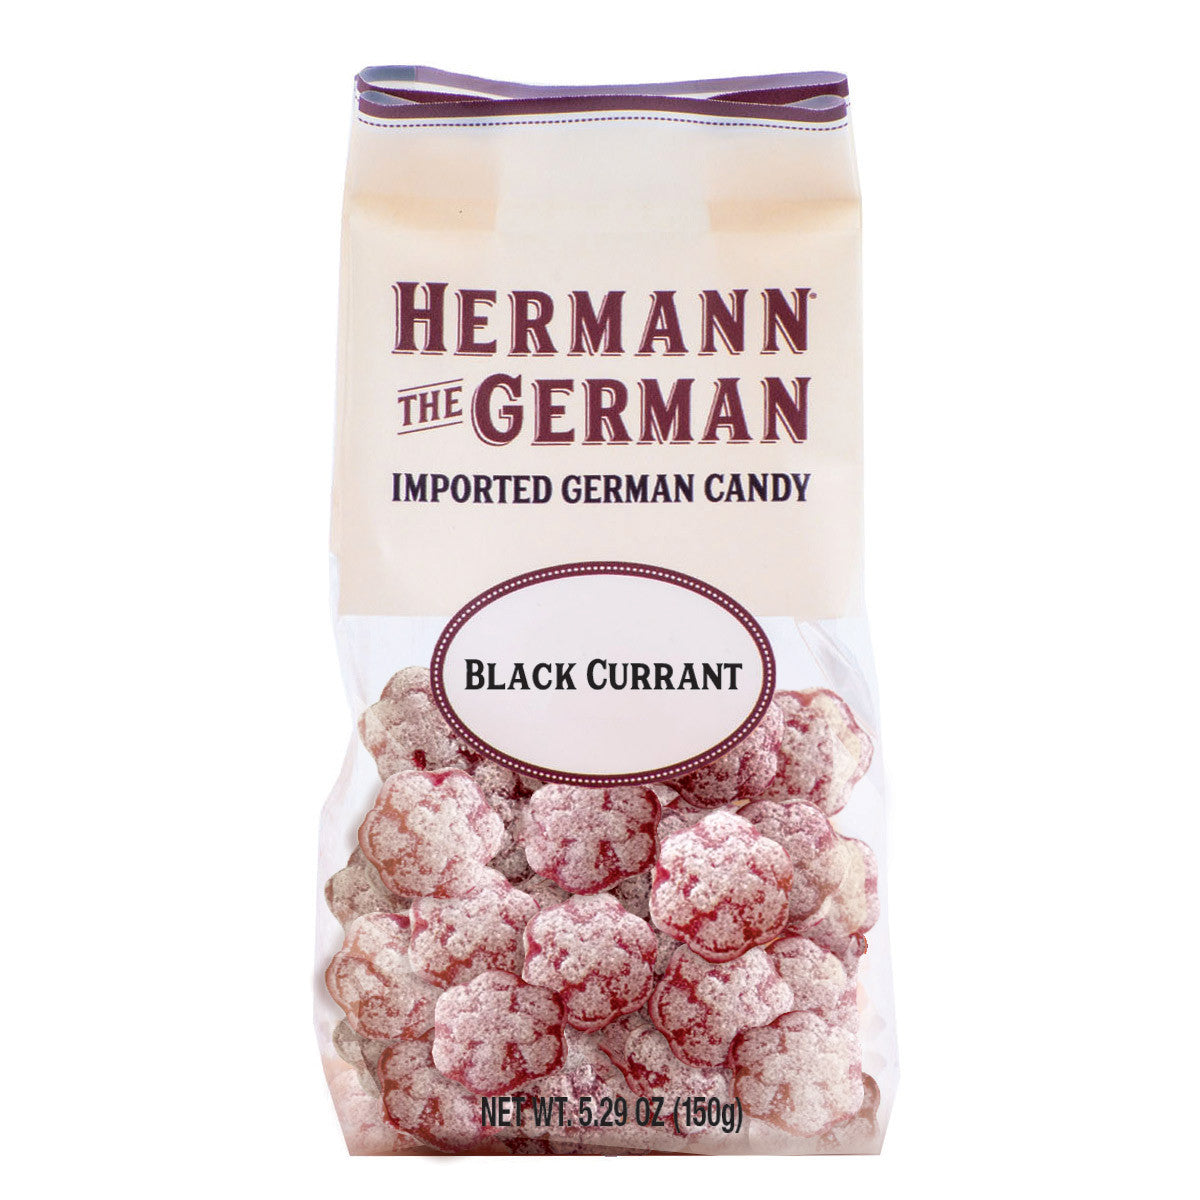 Hermann the German Black Currant Candy, 5.29 oz.